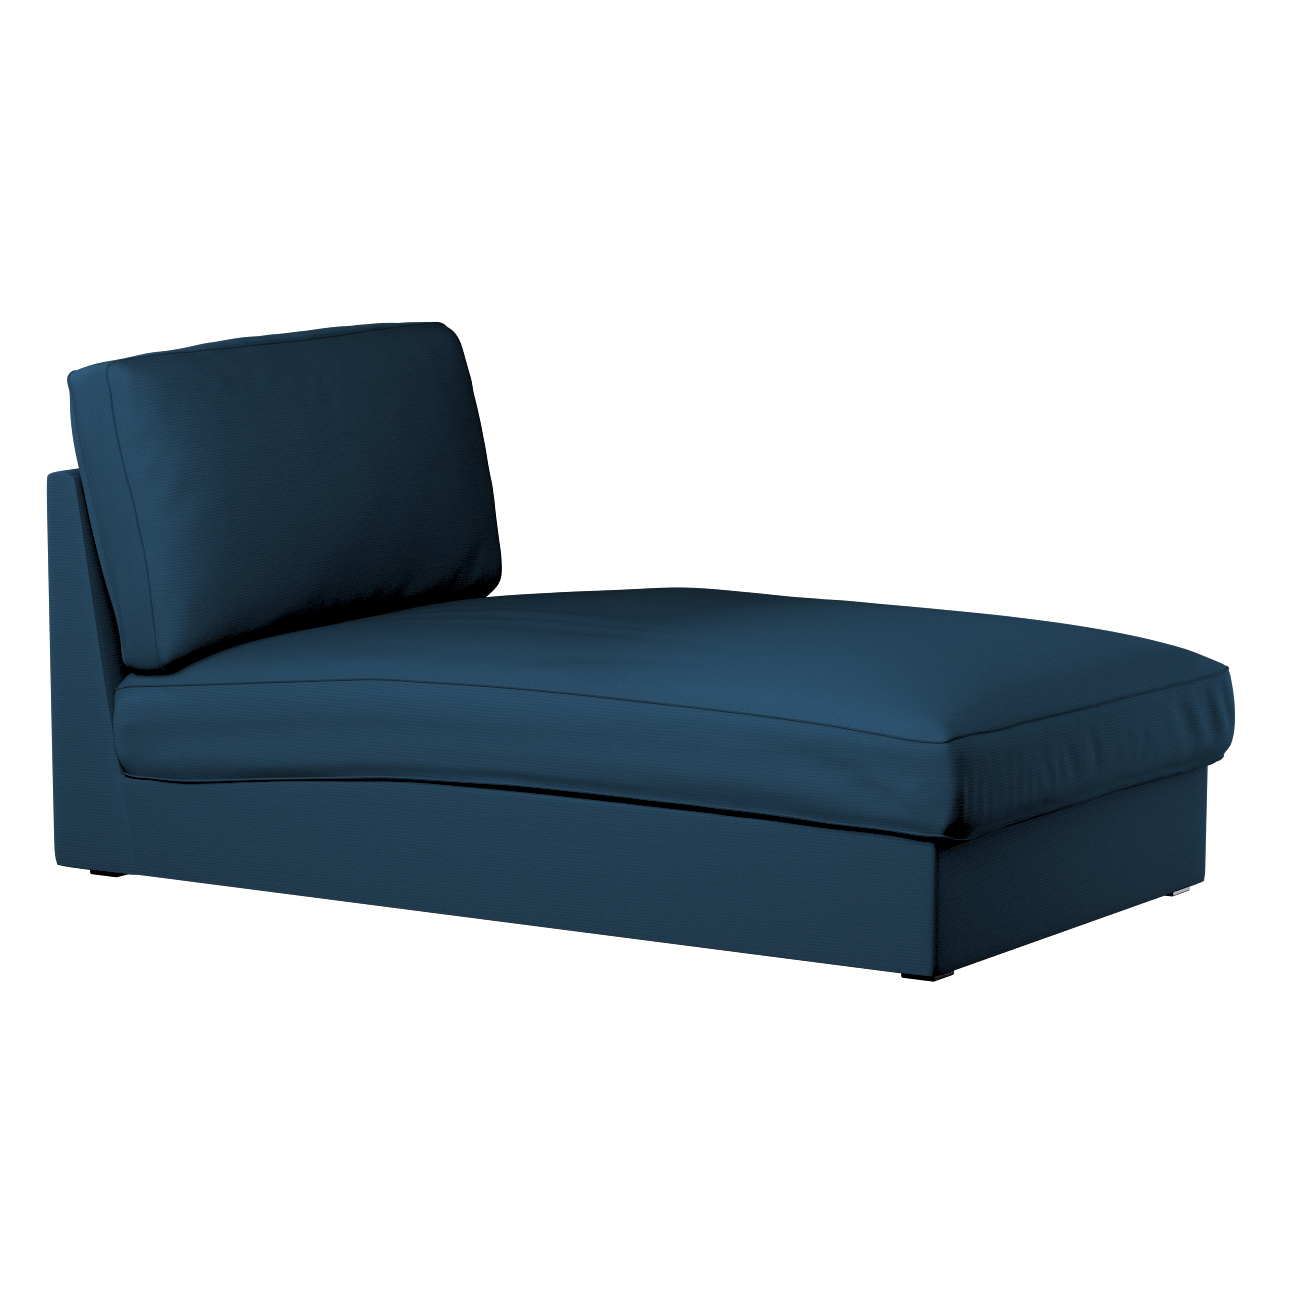 Bezug für Kivik Recamiere Sofa, marinenblau , Bezug für Kivik Recamiere, Co günstig online kaufen